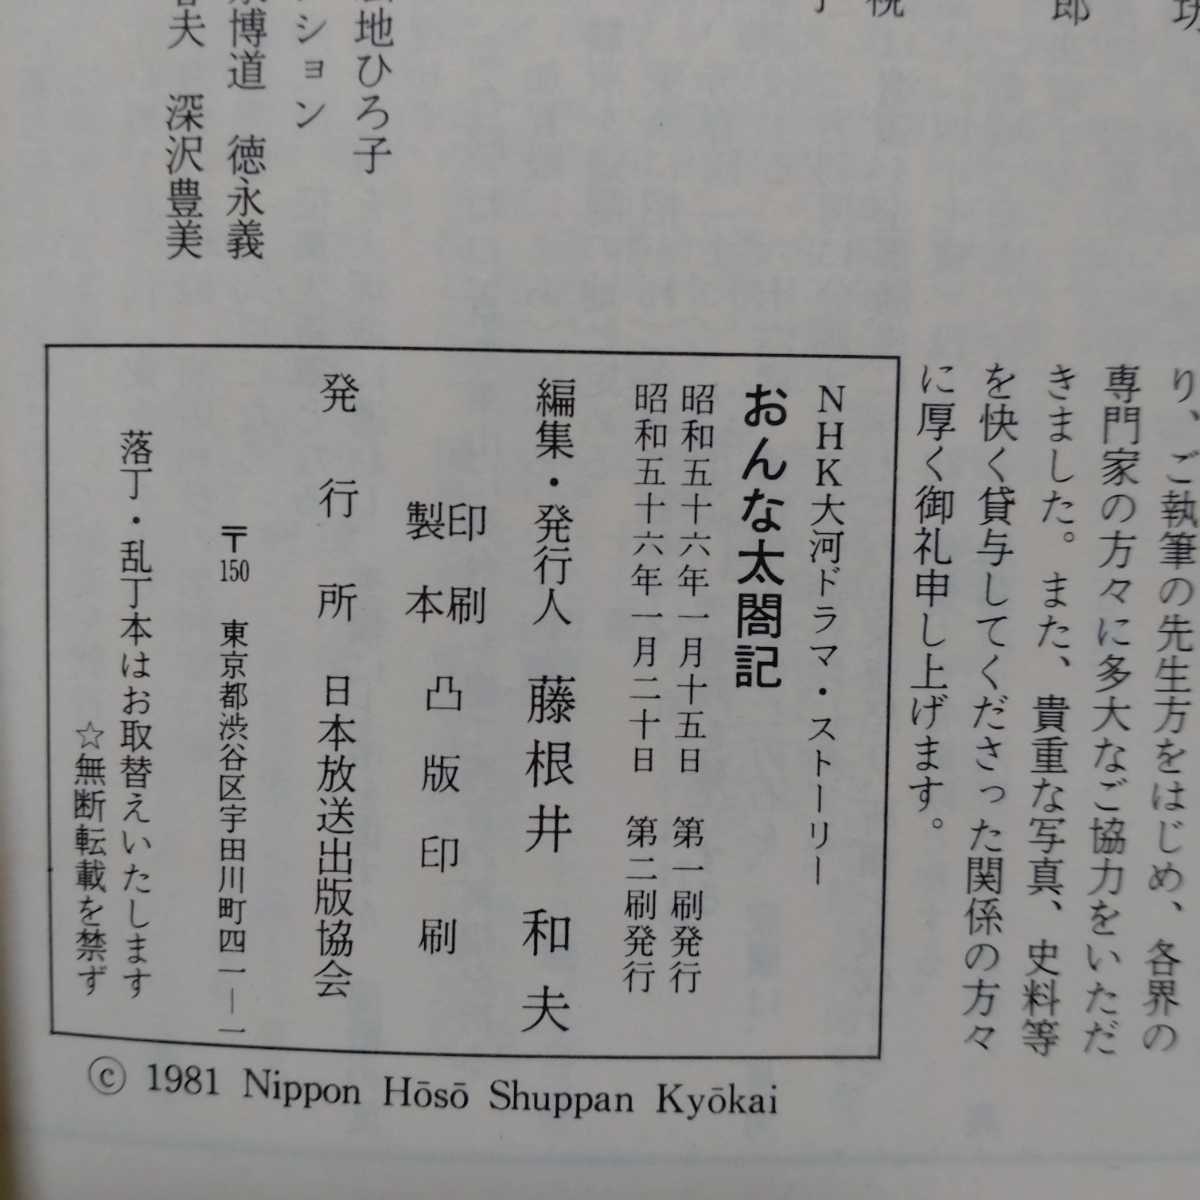 o.. futoshi . chronicle NHK large river drama * -stroke - Lee 